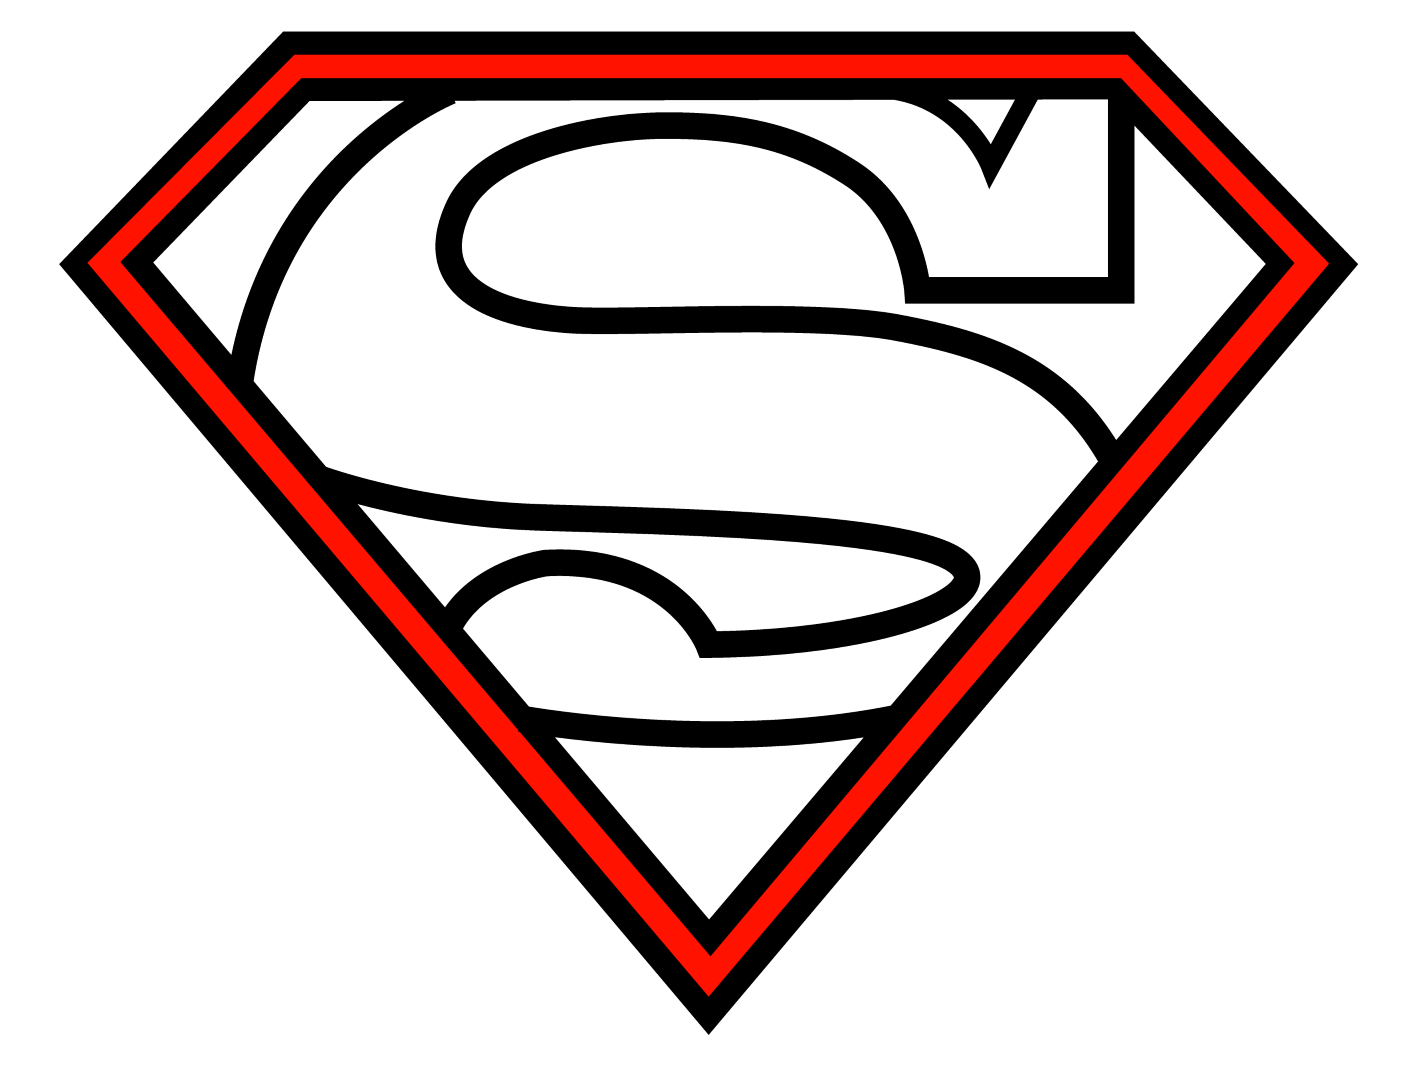 Superman Logo Clip Art